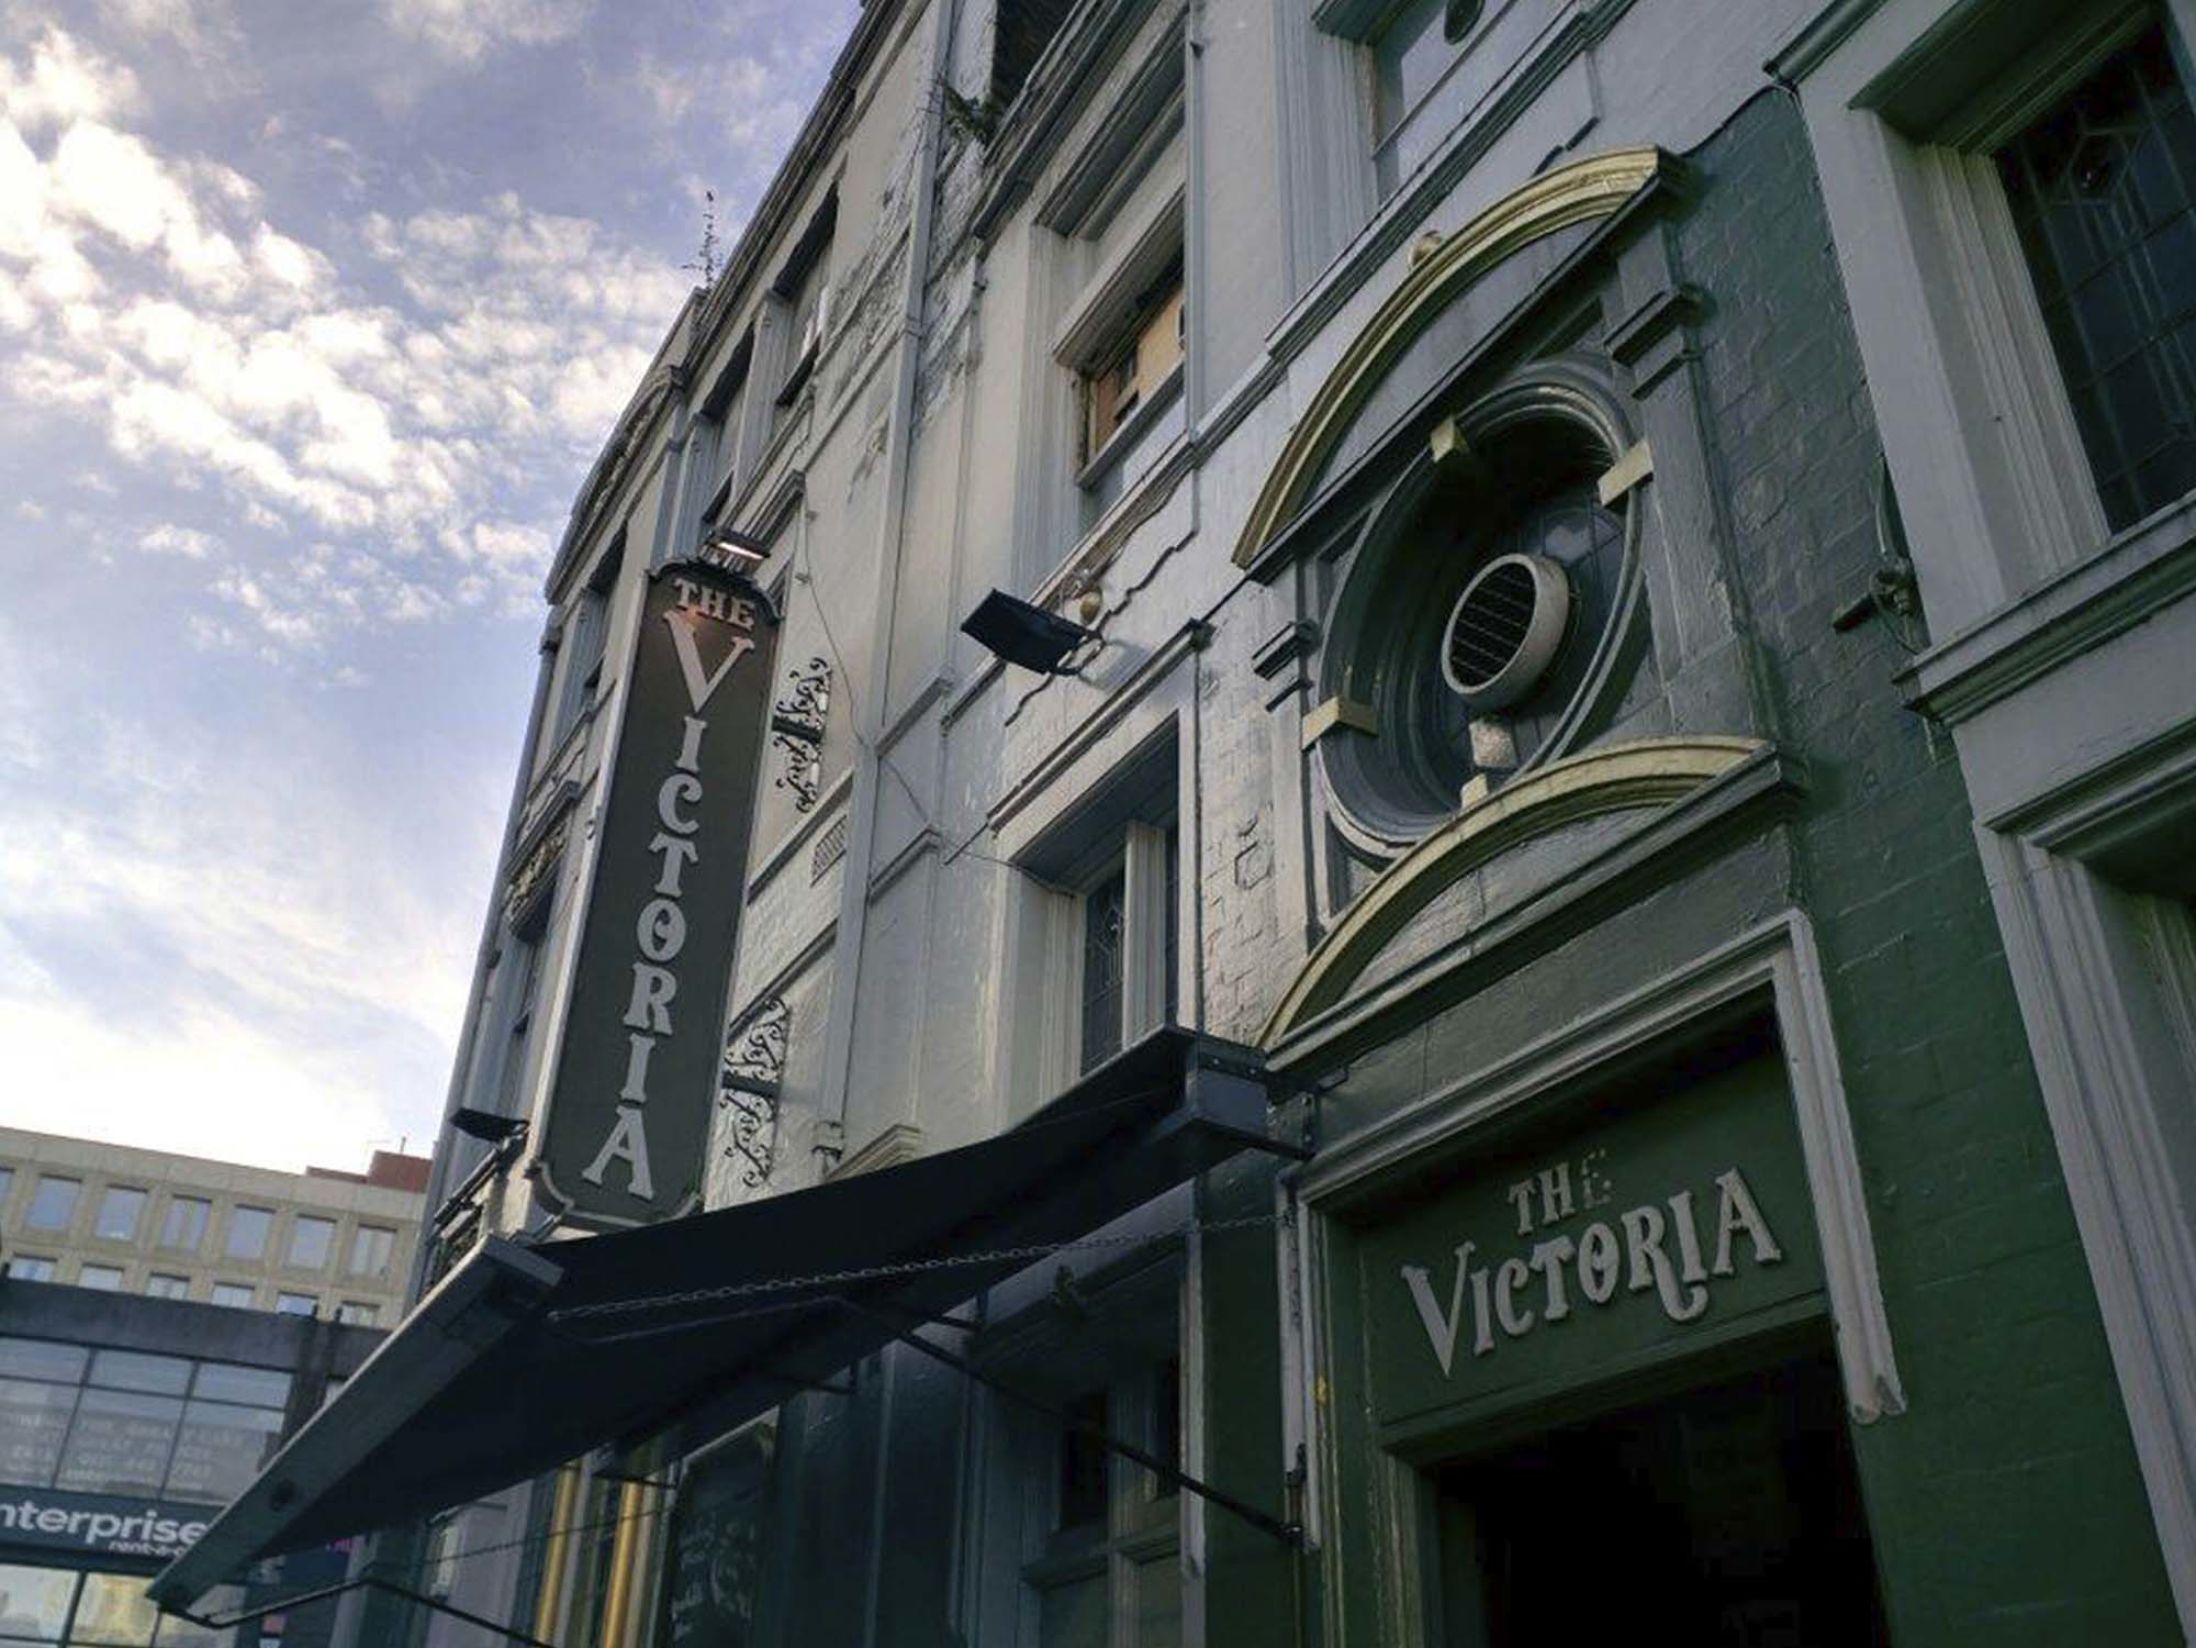 The Victoria - Best Bars in Birmingham